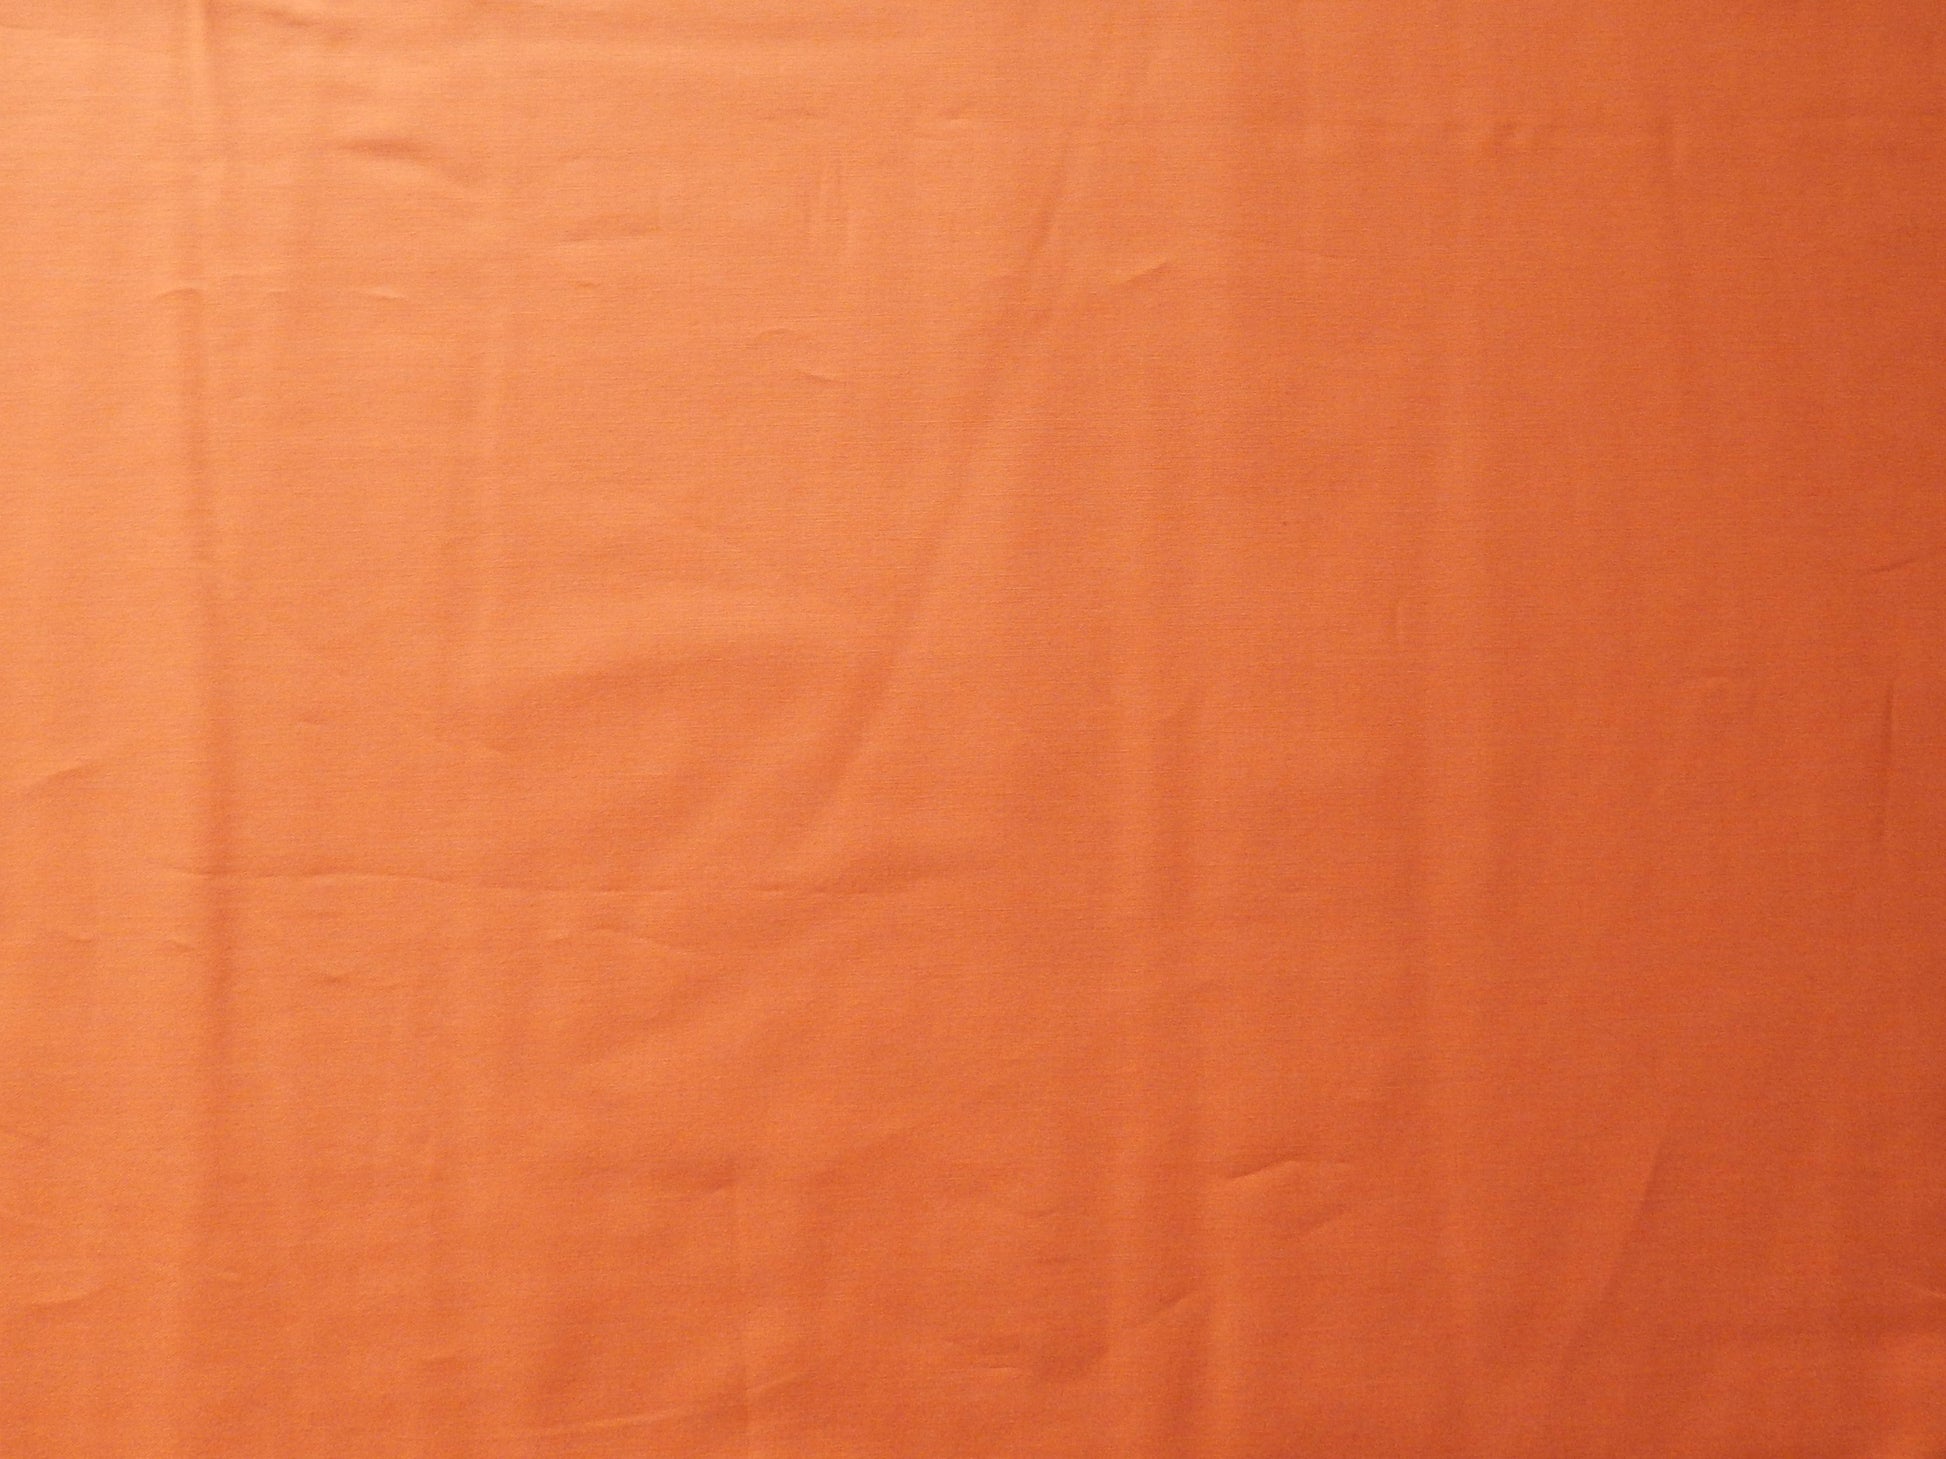 painters palette pumpkin orange quilting fabric